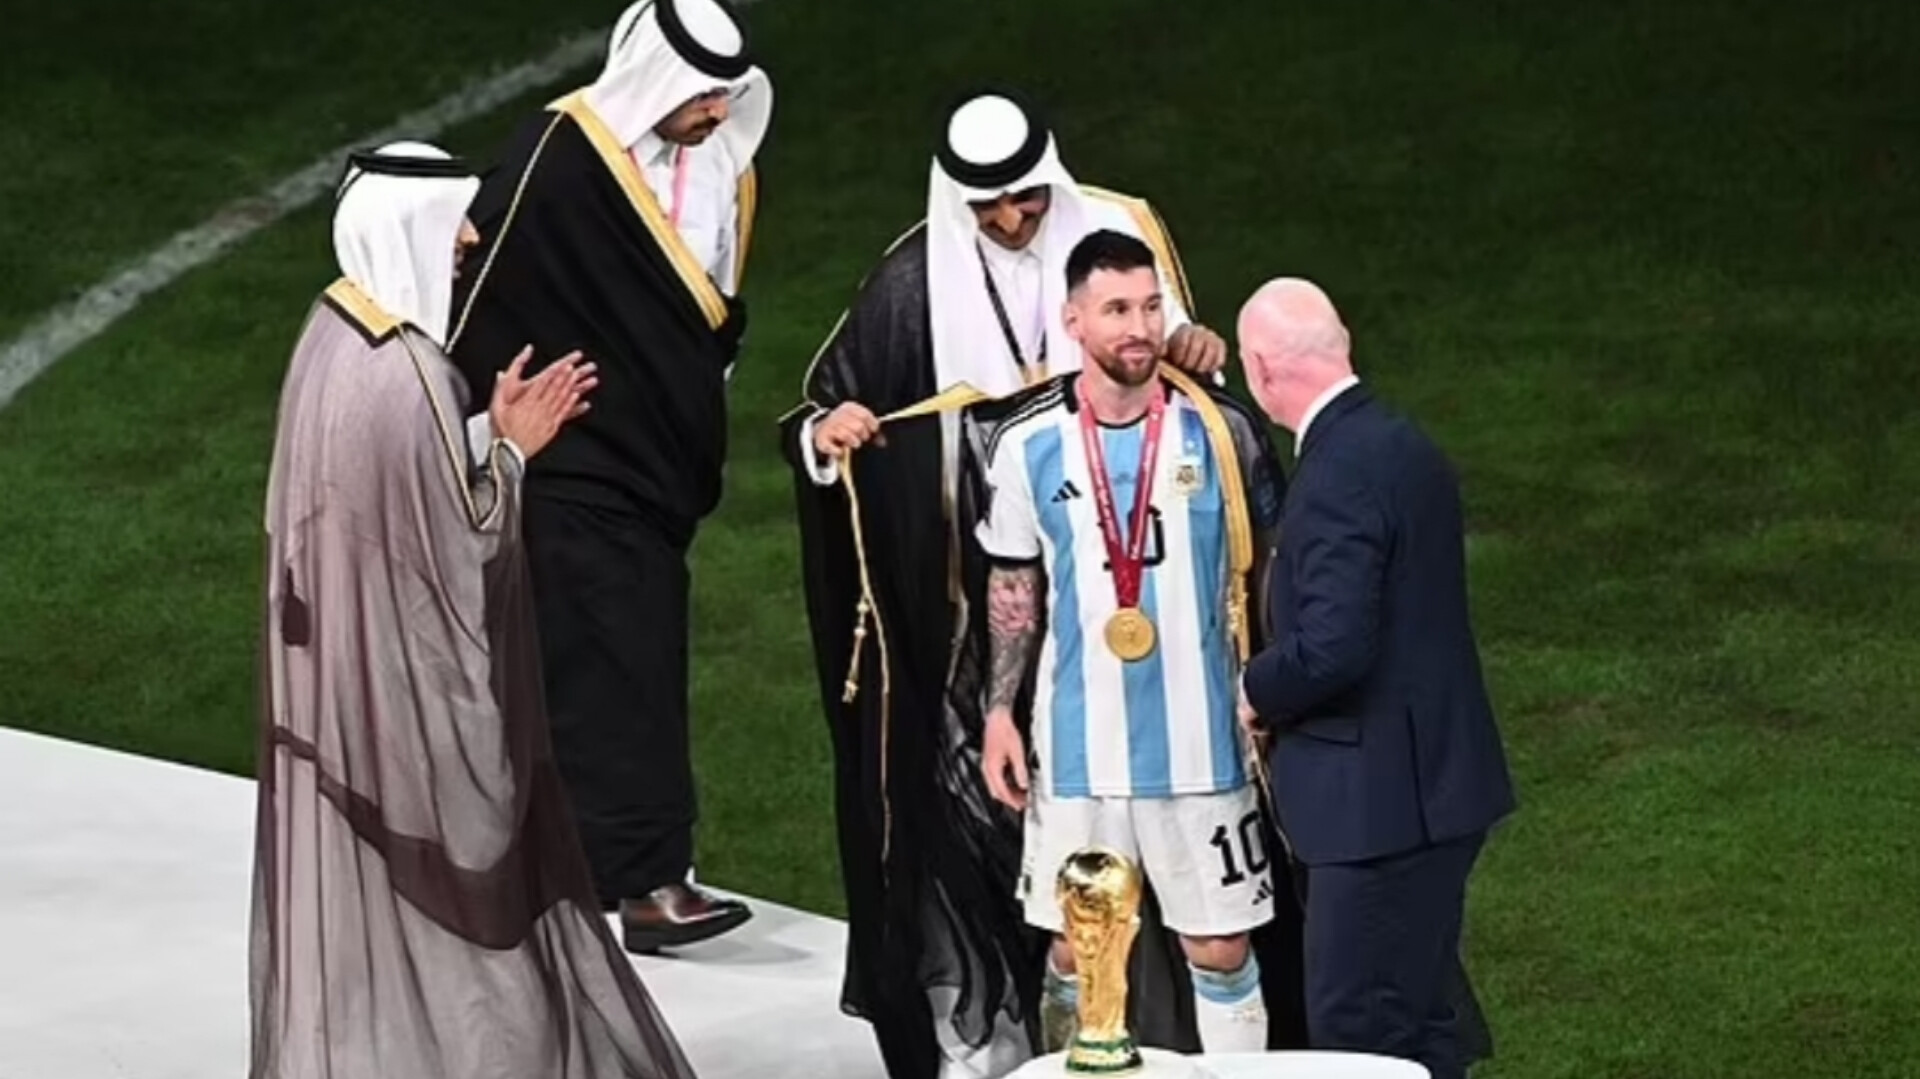 Lionel Messi FIFA World Cup Qatar 2022